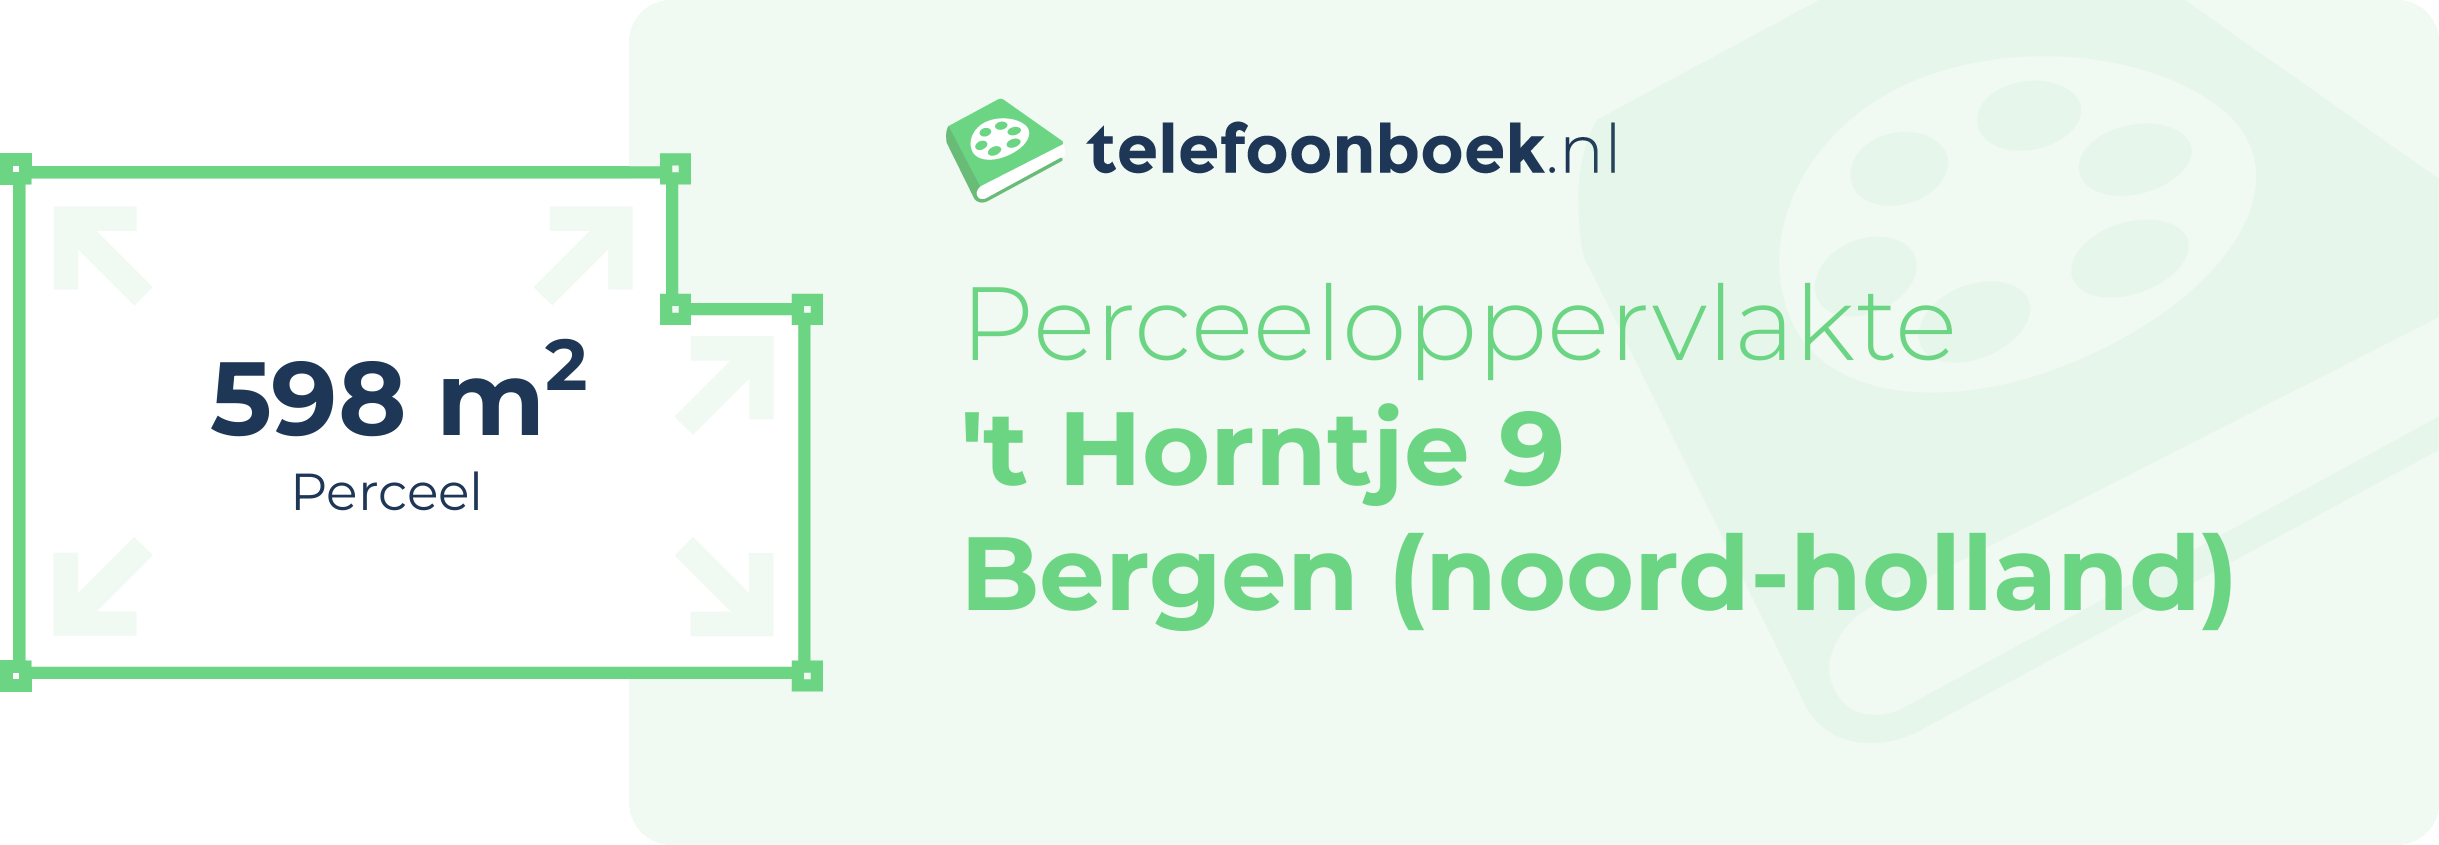 Perceeloppervlakte 't Horntje 9 Bergen (Noord-Holland)